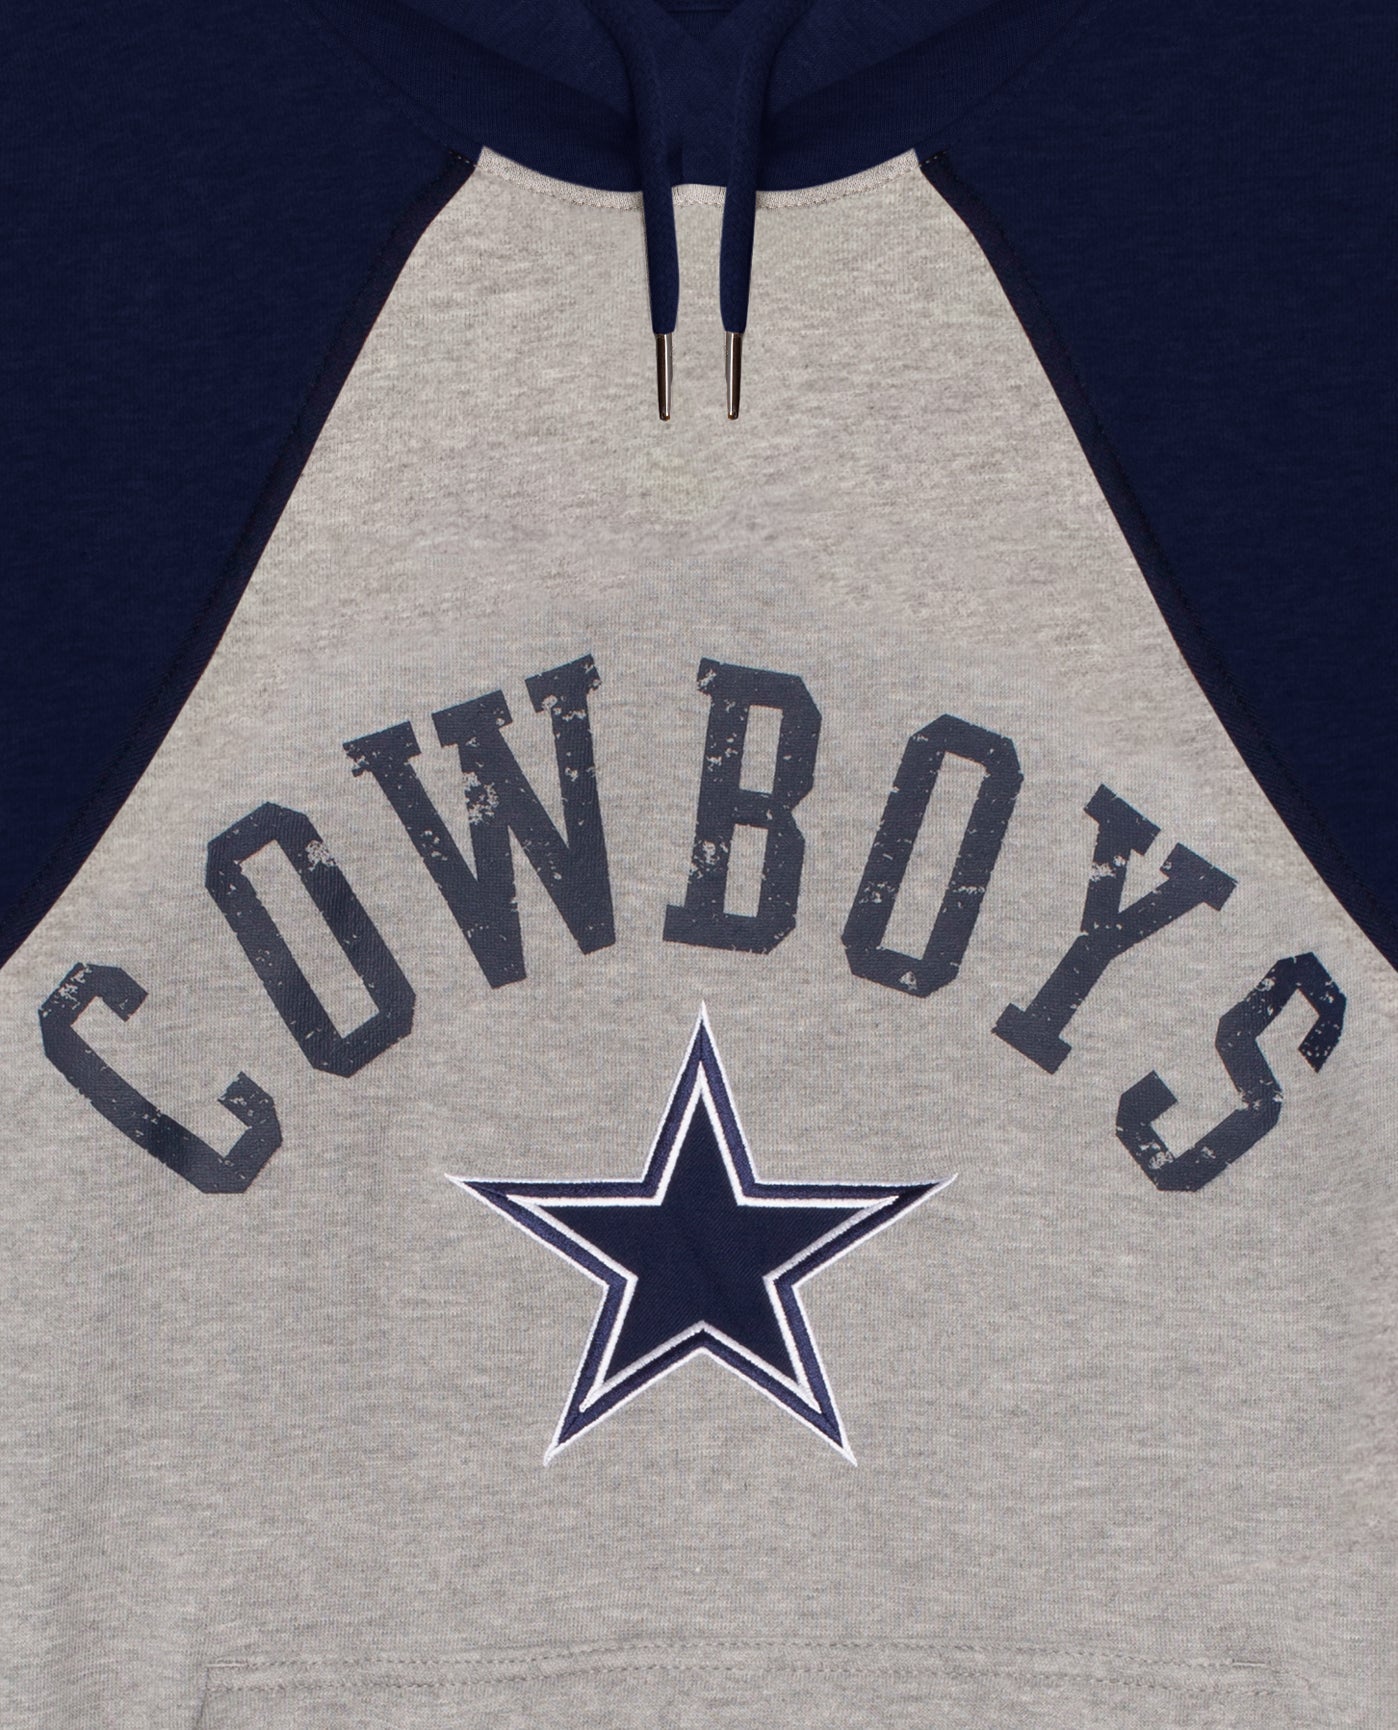 Team Name and Logo On Chest Of Dallas Cowboys Zip Pocket Hoodie Sweatshirt | Cowboys Heather Gray